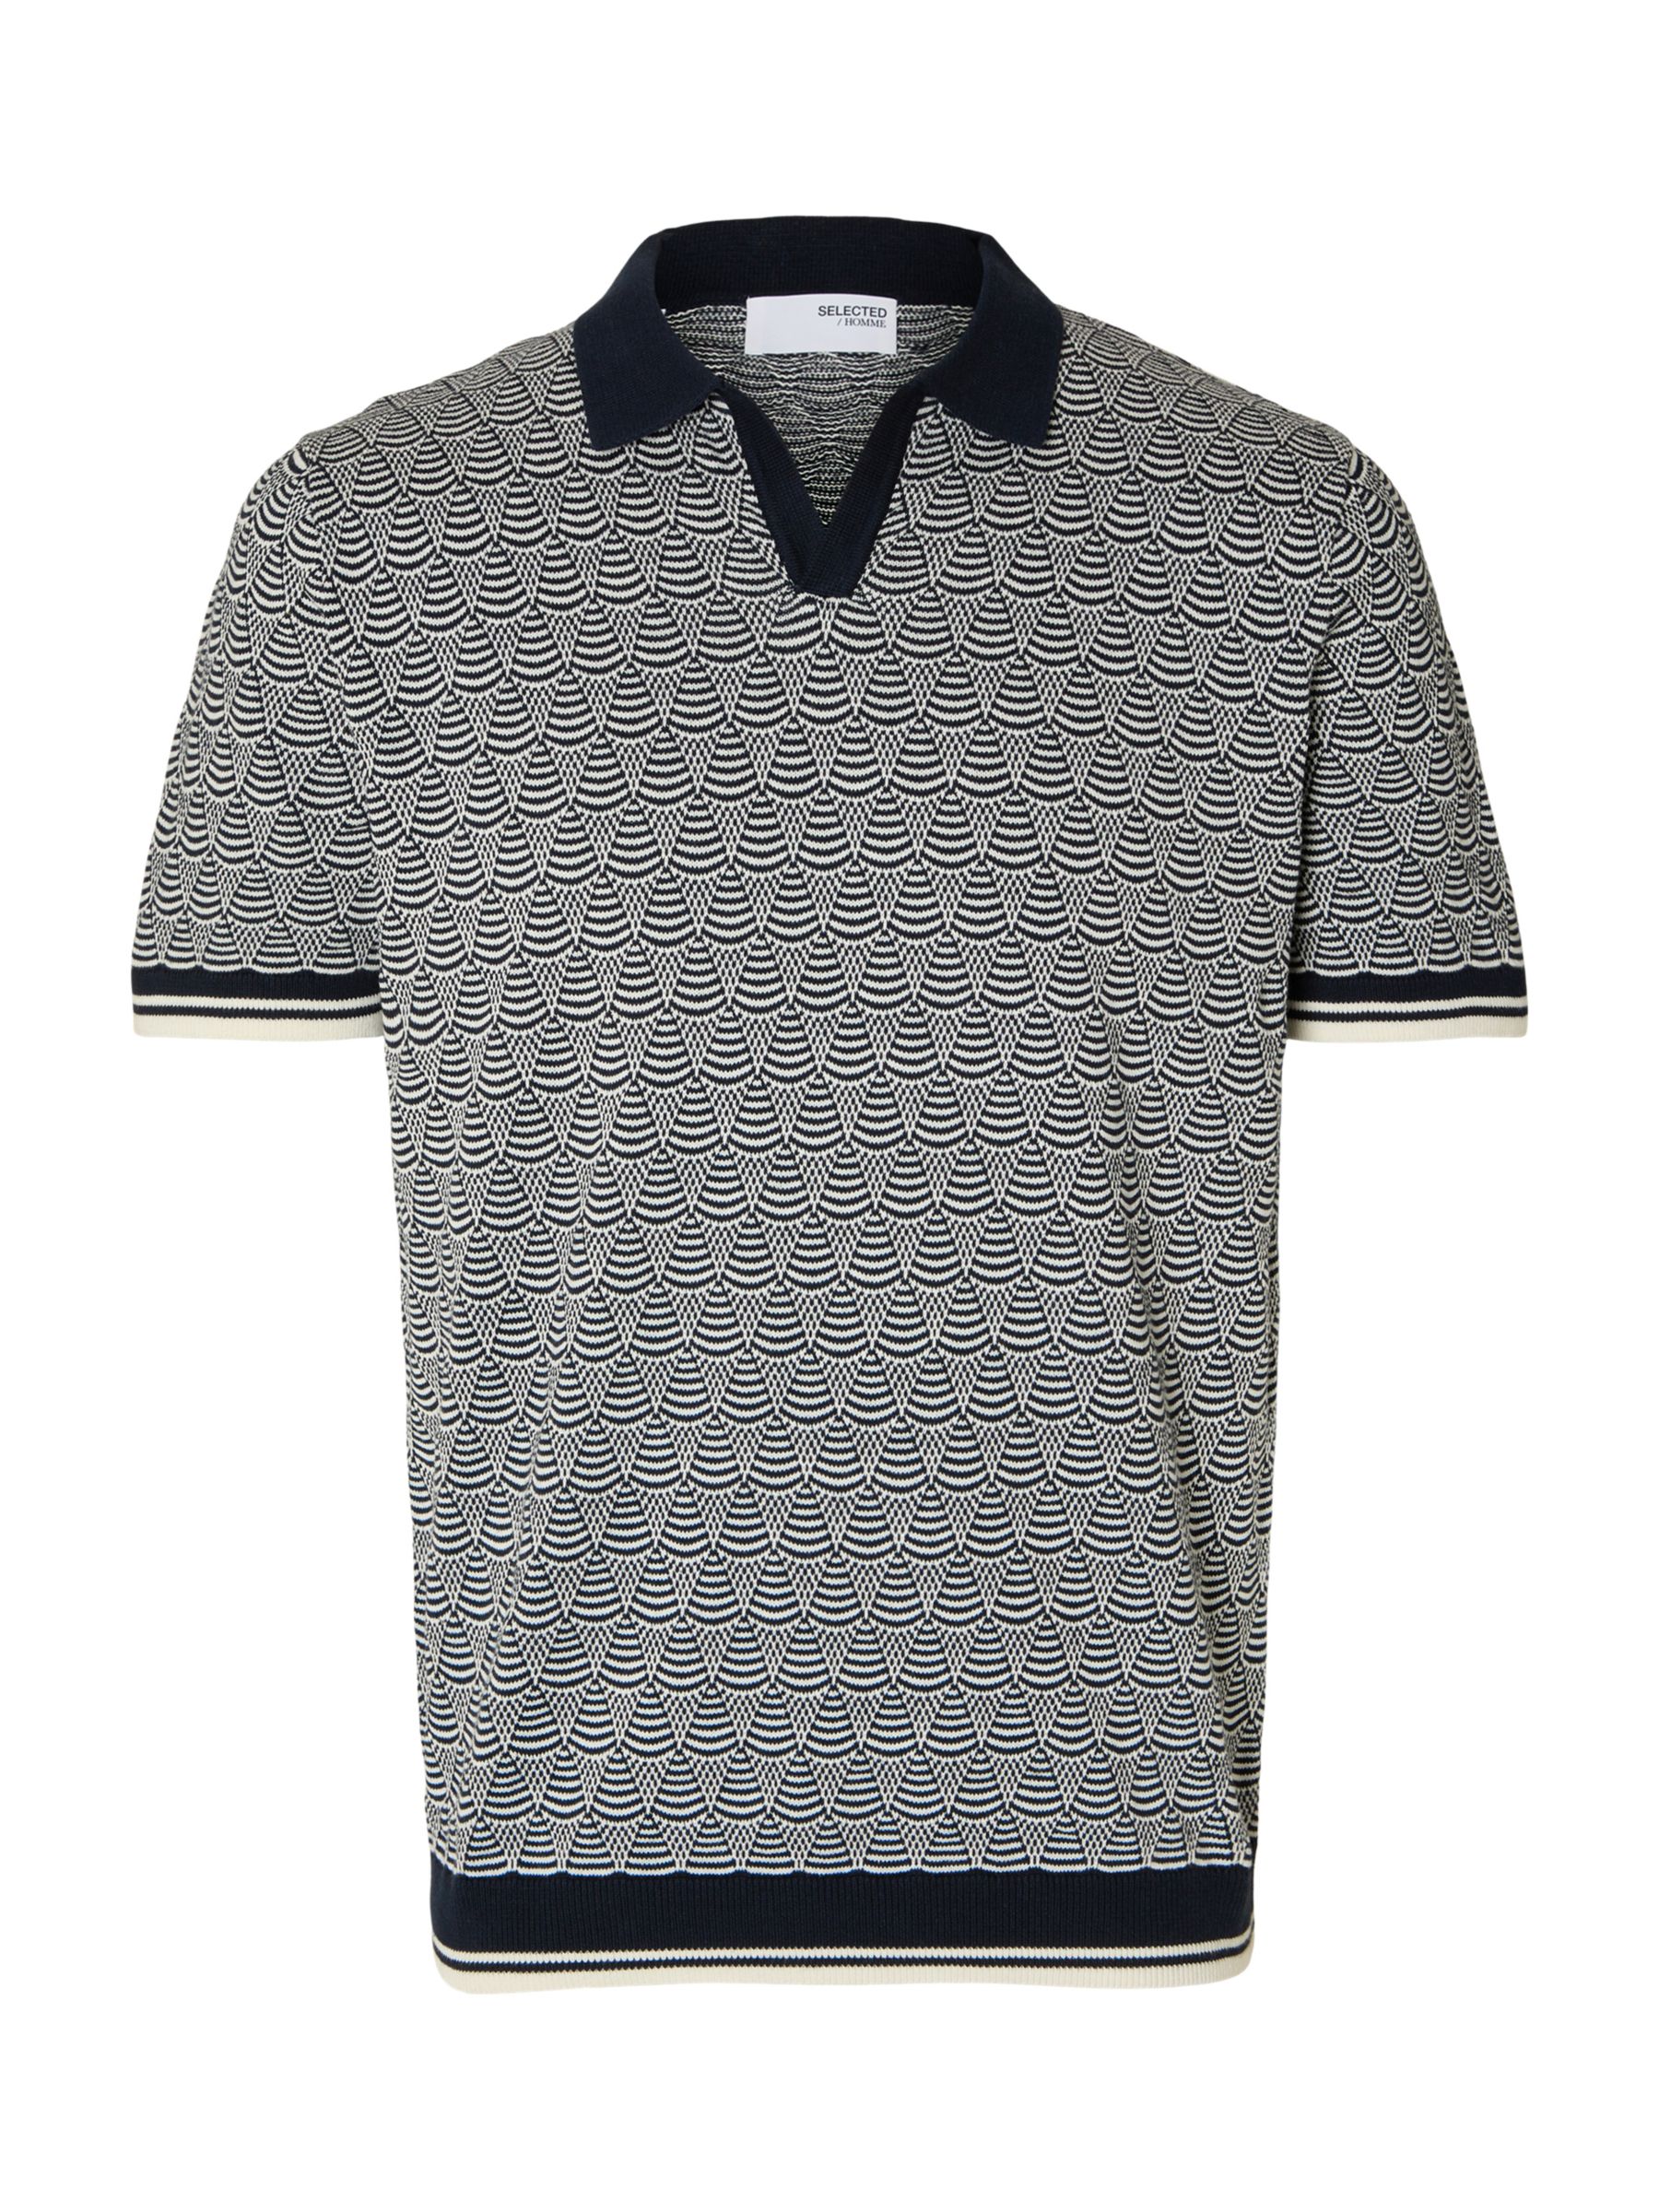 SELECTED HOMME Geometric Knit Polo Shirt, Sky Captain/Egret, S